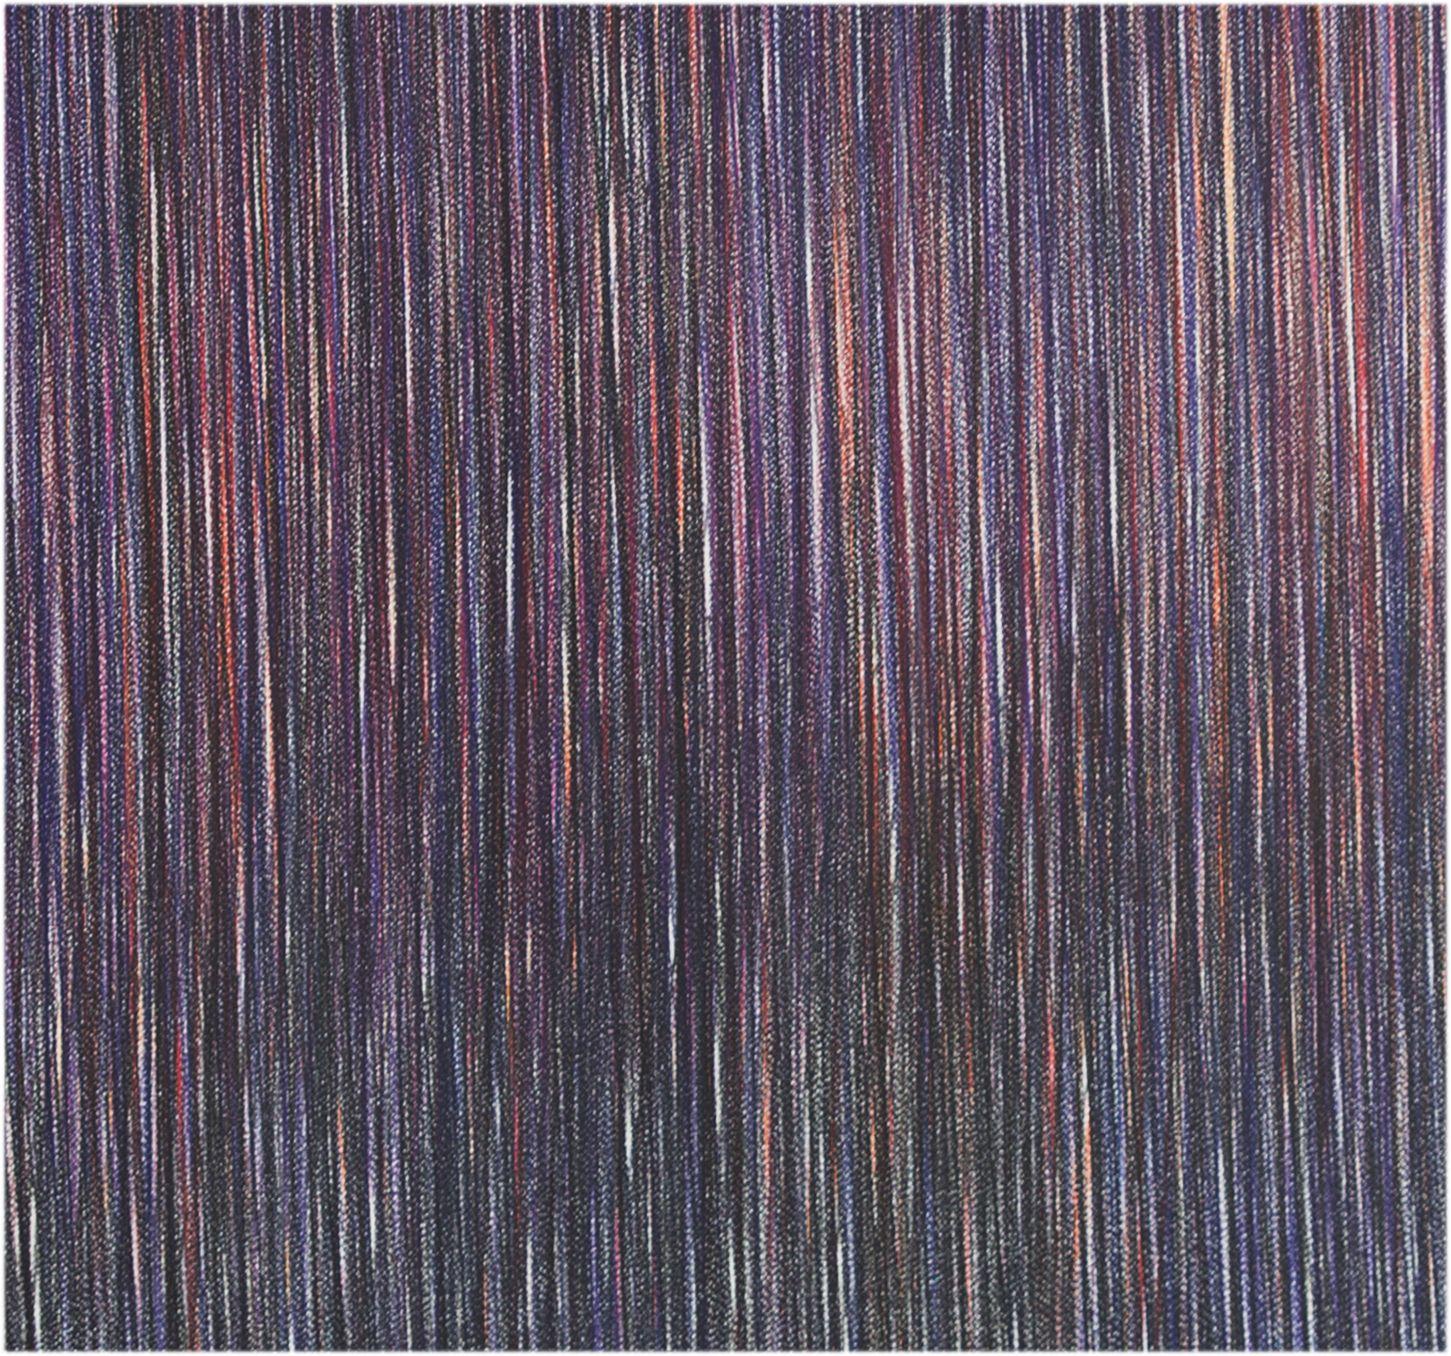 Vertical Violeta, Drawing, Pencil/Colored Pencil on Watercolor Paper - Contemporary Art by Cintia GarcÃ­a